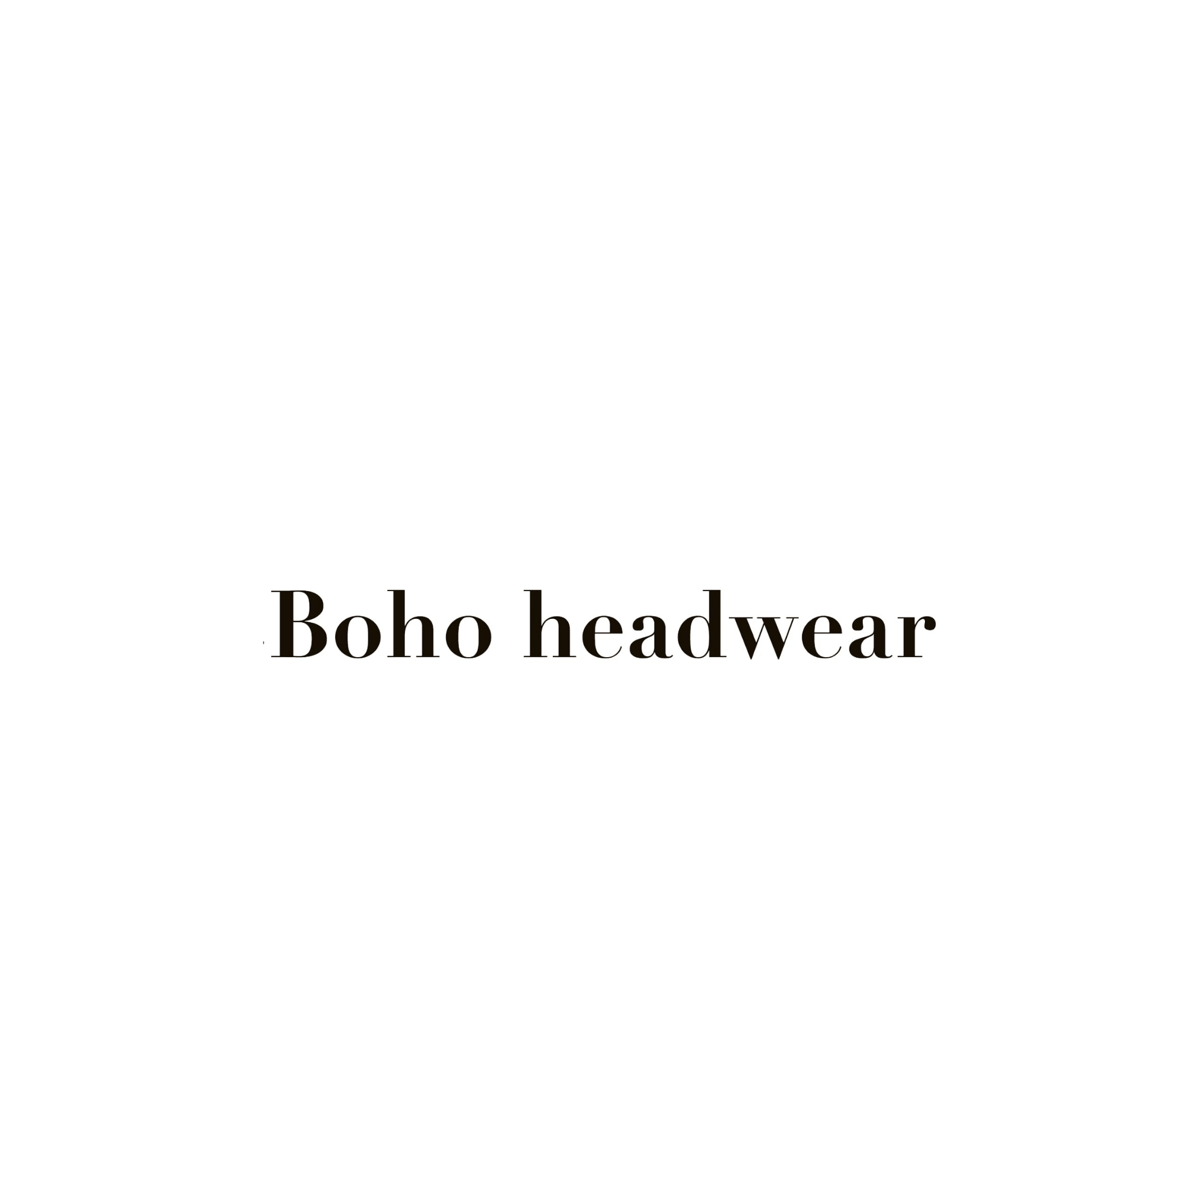 Bohoheadwear